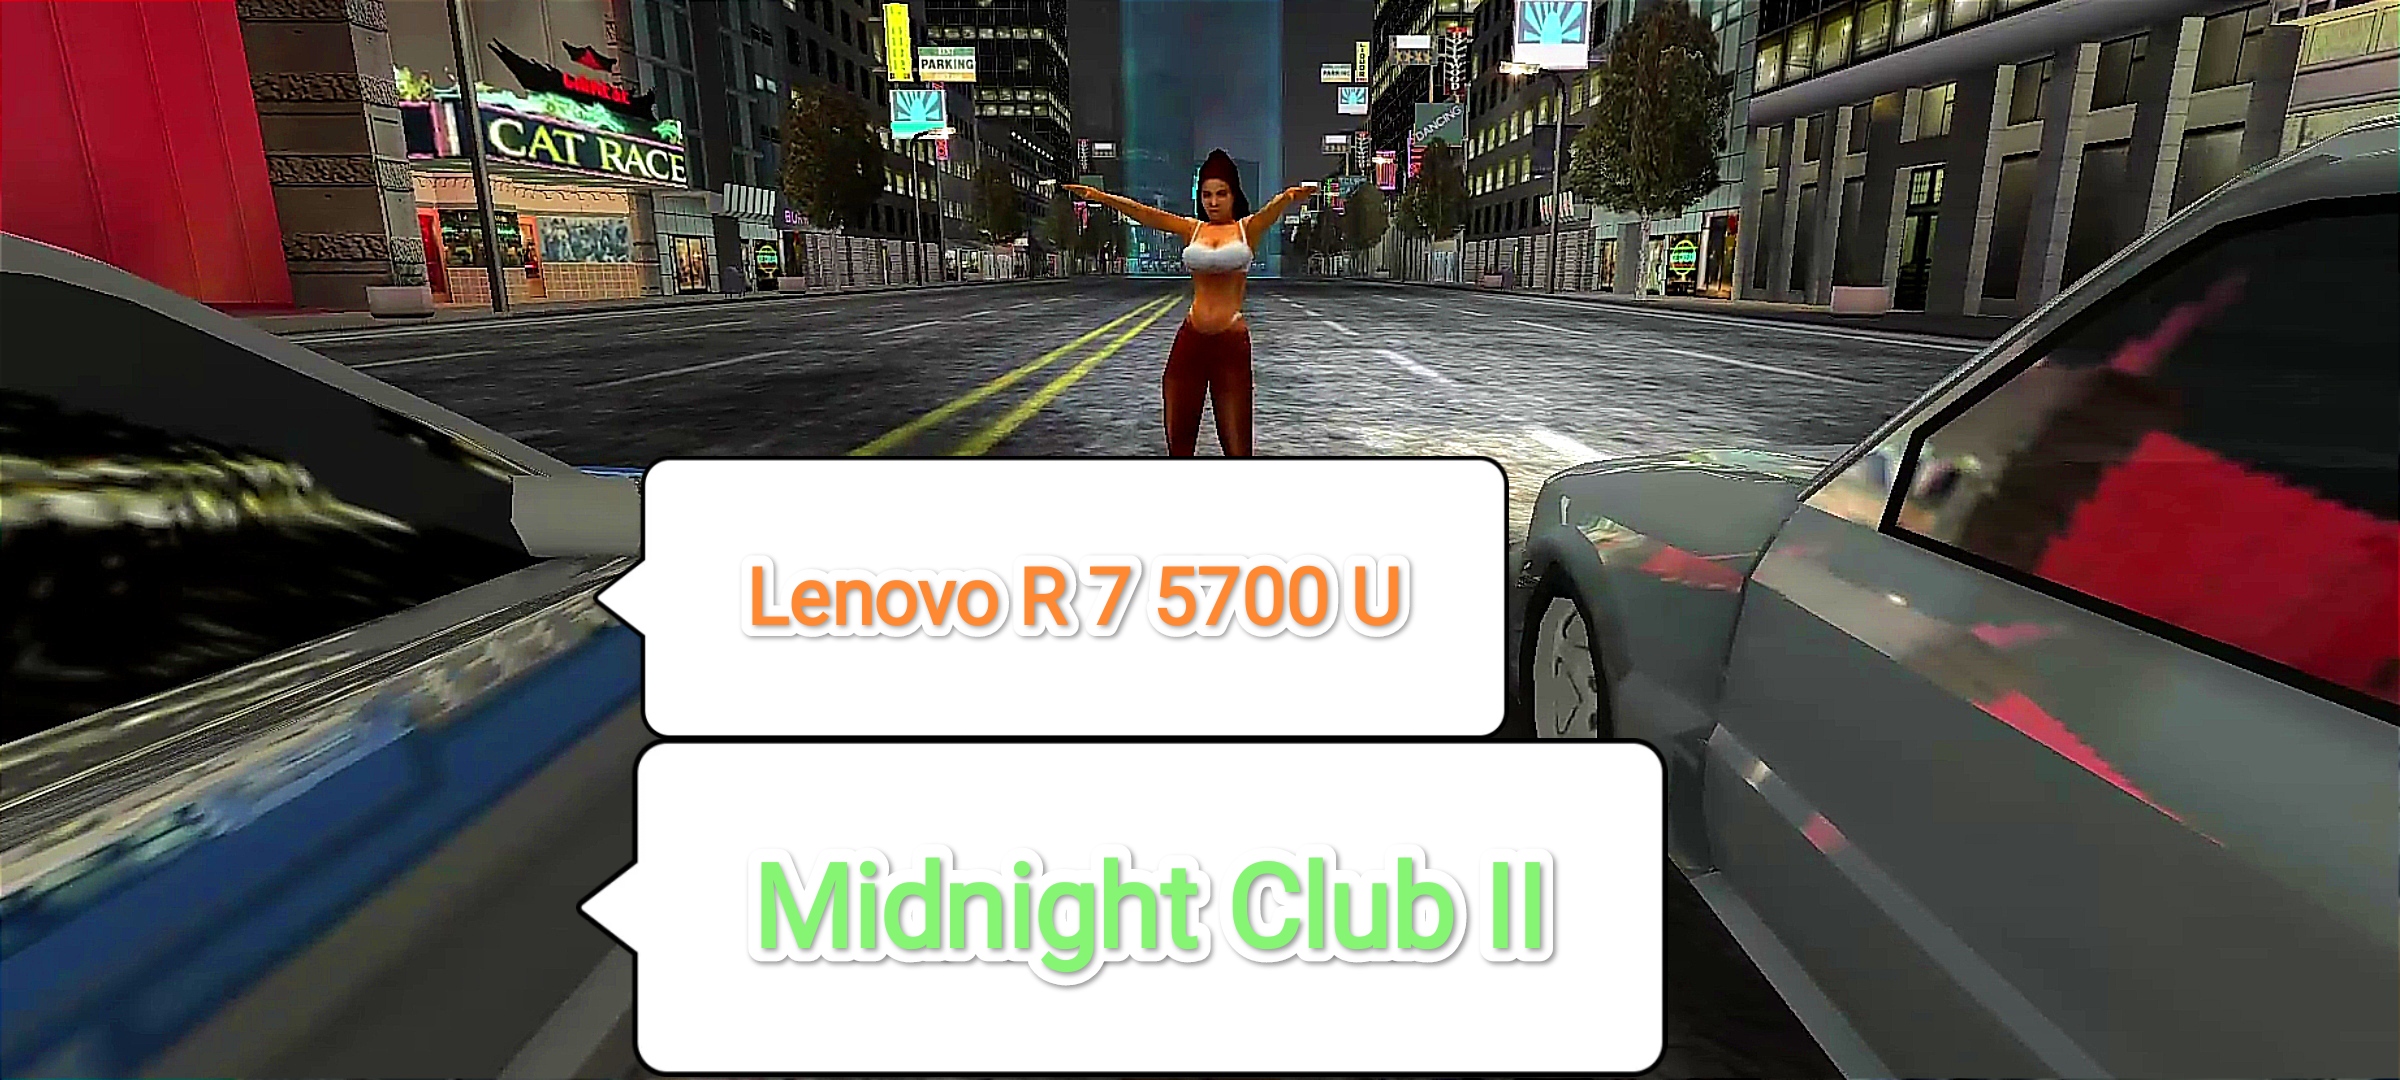 Midnight Club II (1080р) - 60 фпс на слабом ПК (Lenovo R 7 5700 U)